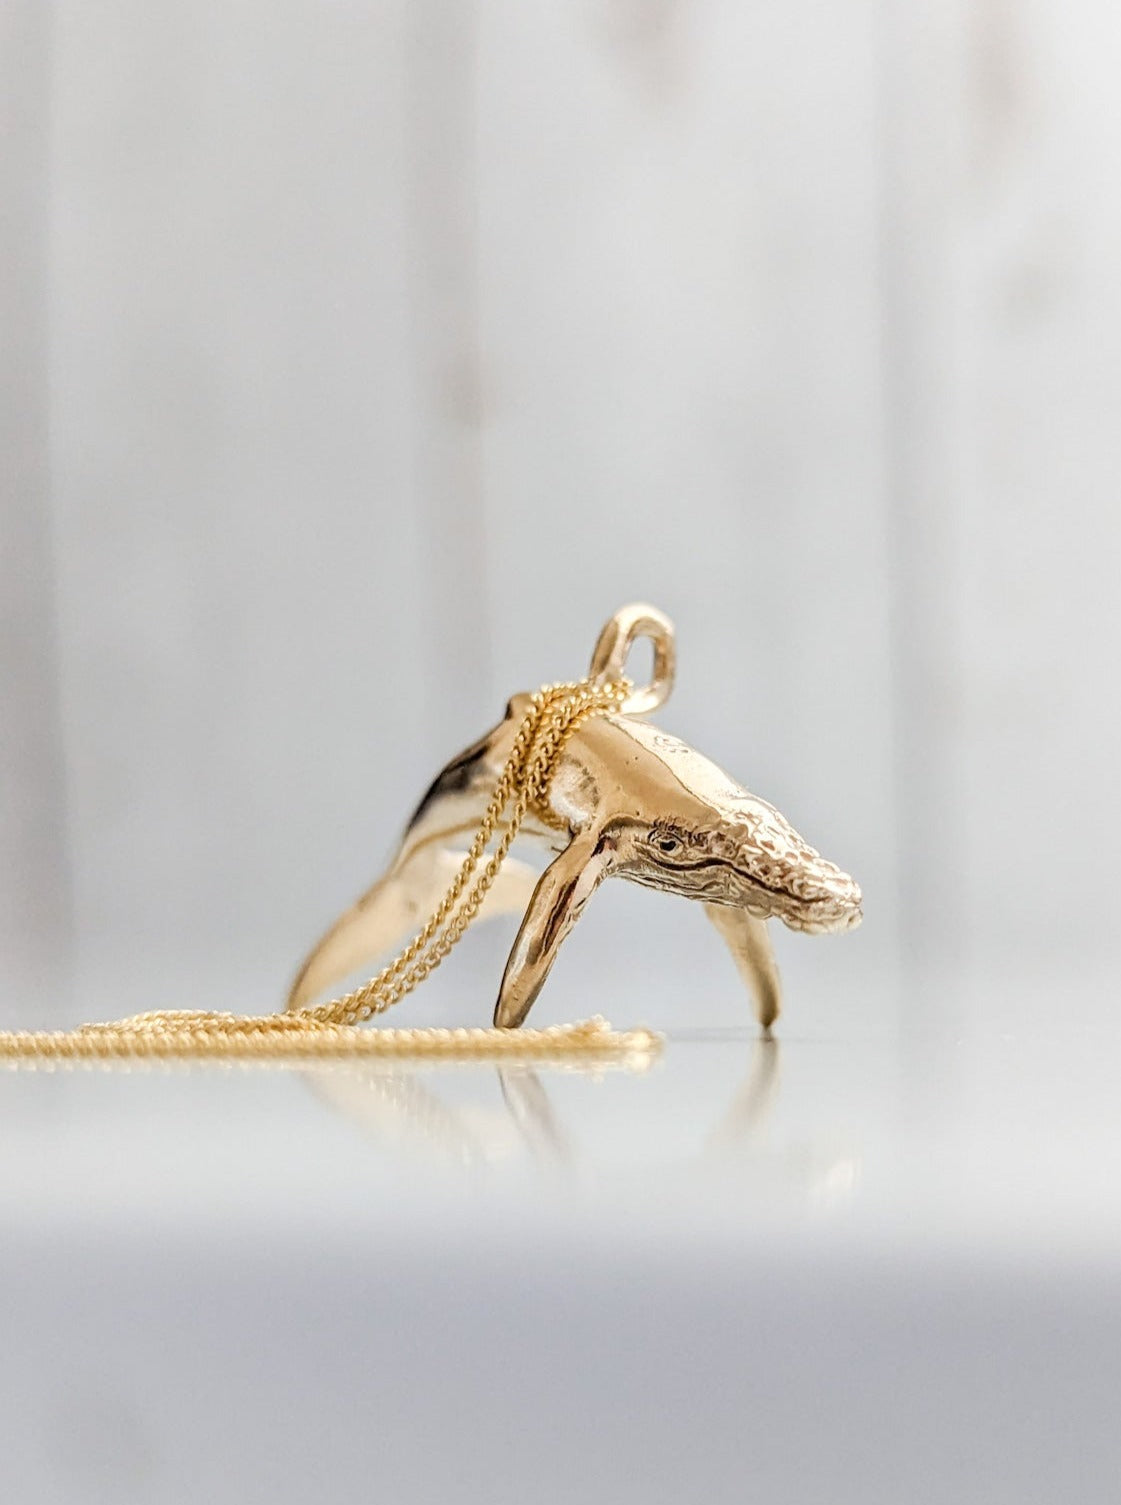 Solid gold petite humpback whale charm pendant